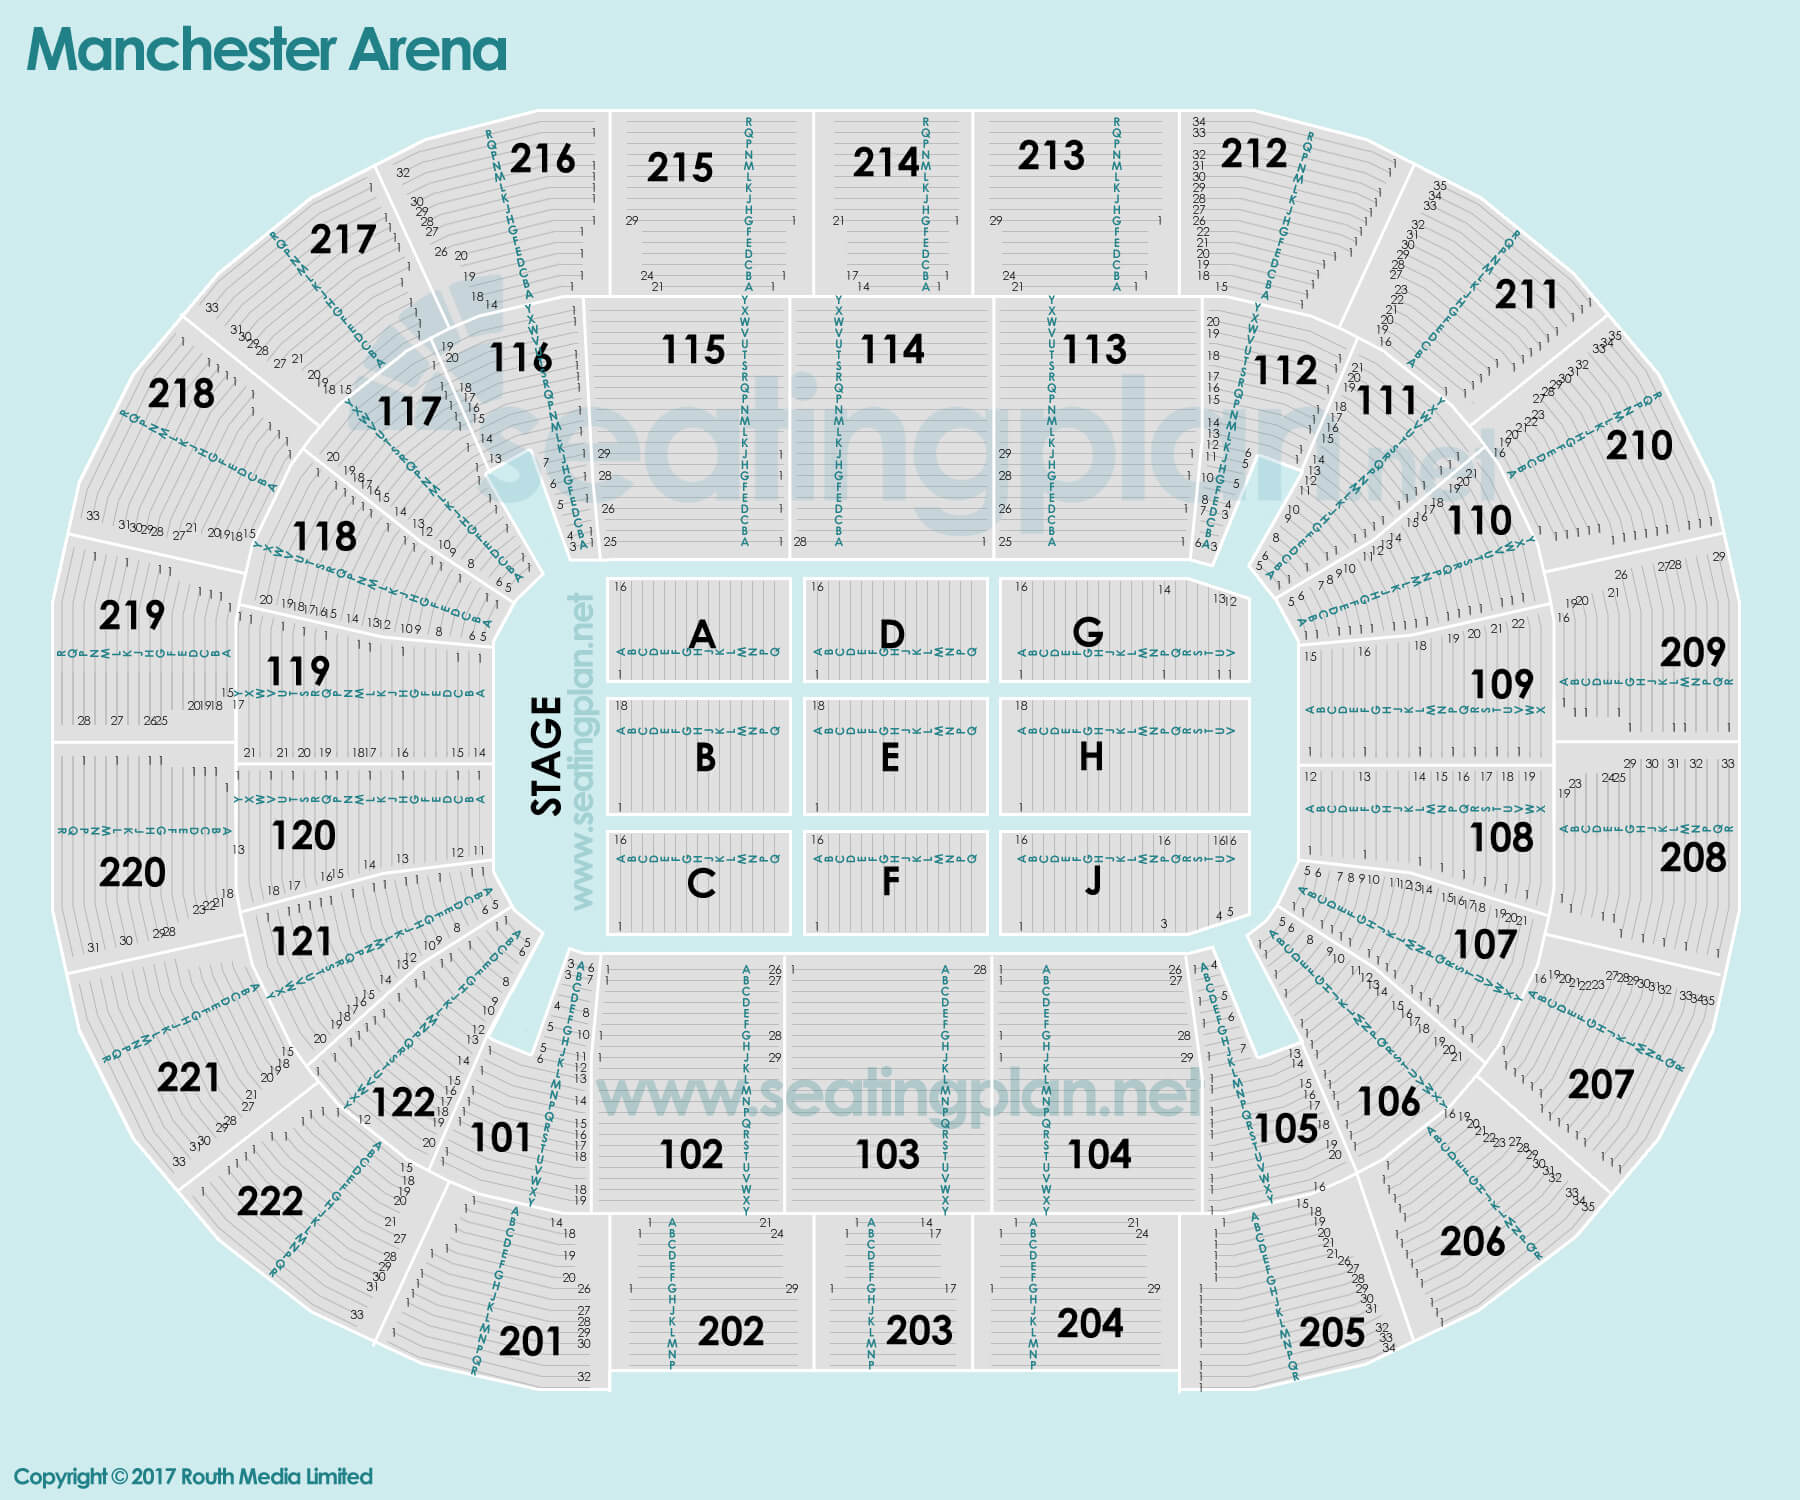 detailed Seating Plan at Manchester Arena